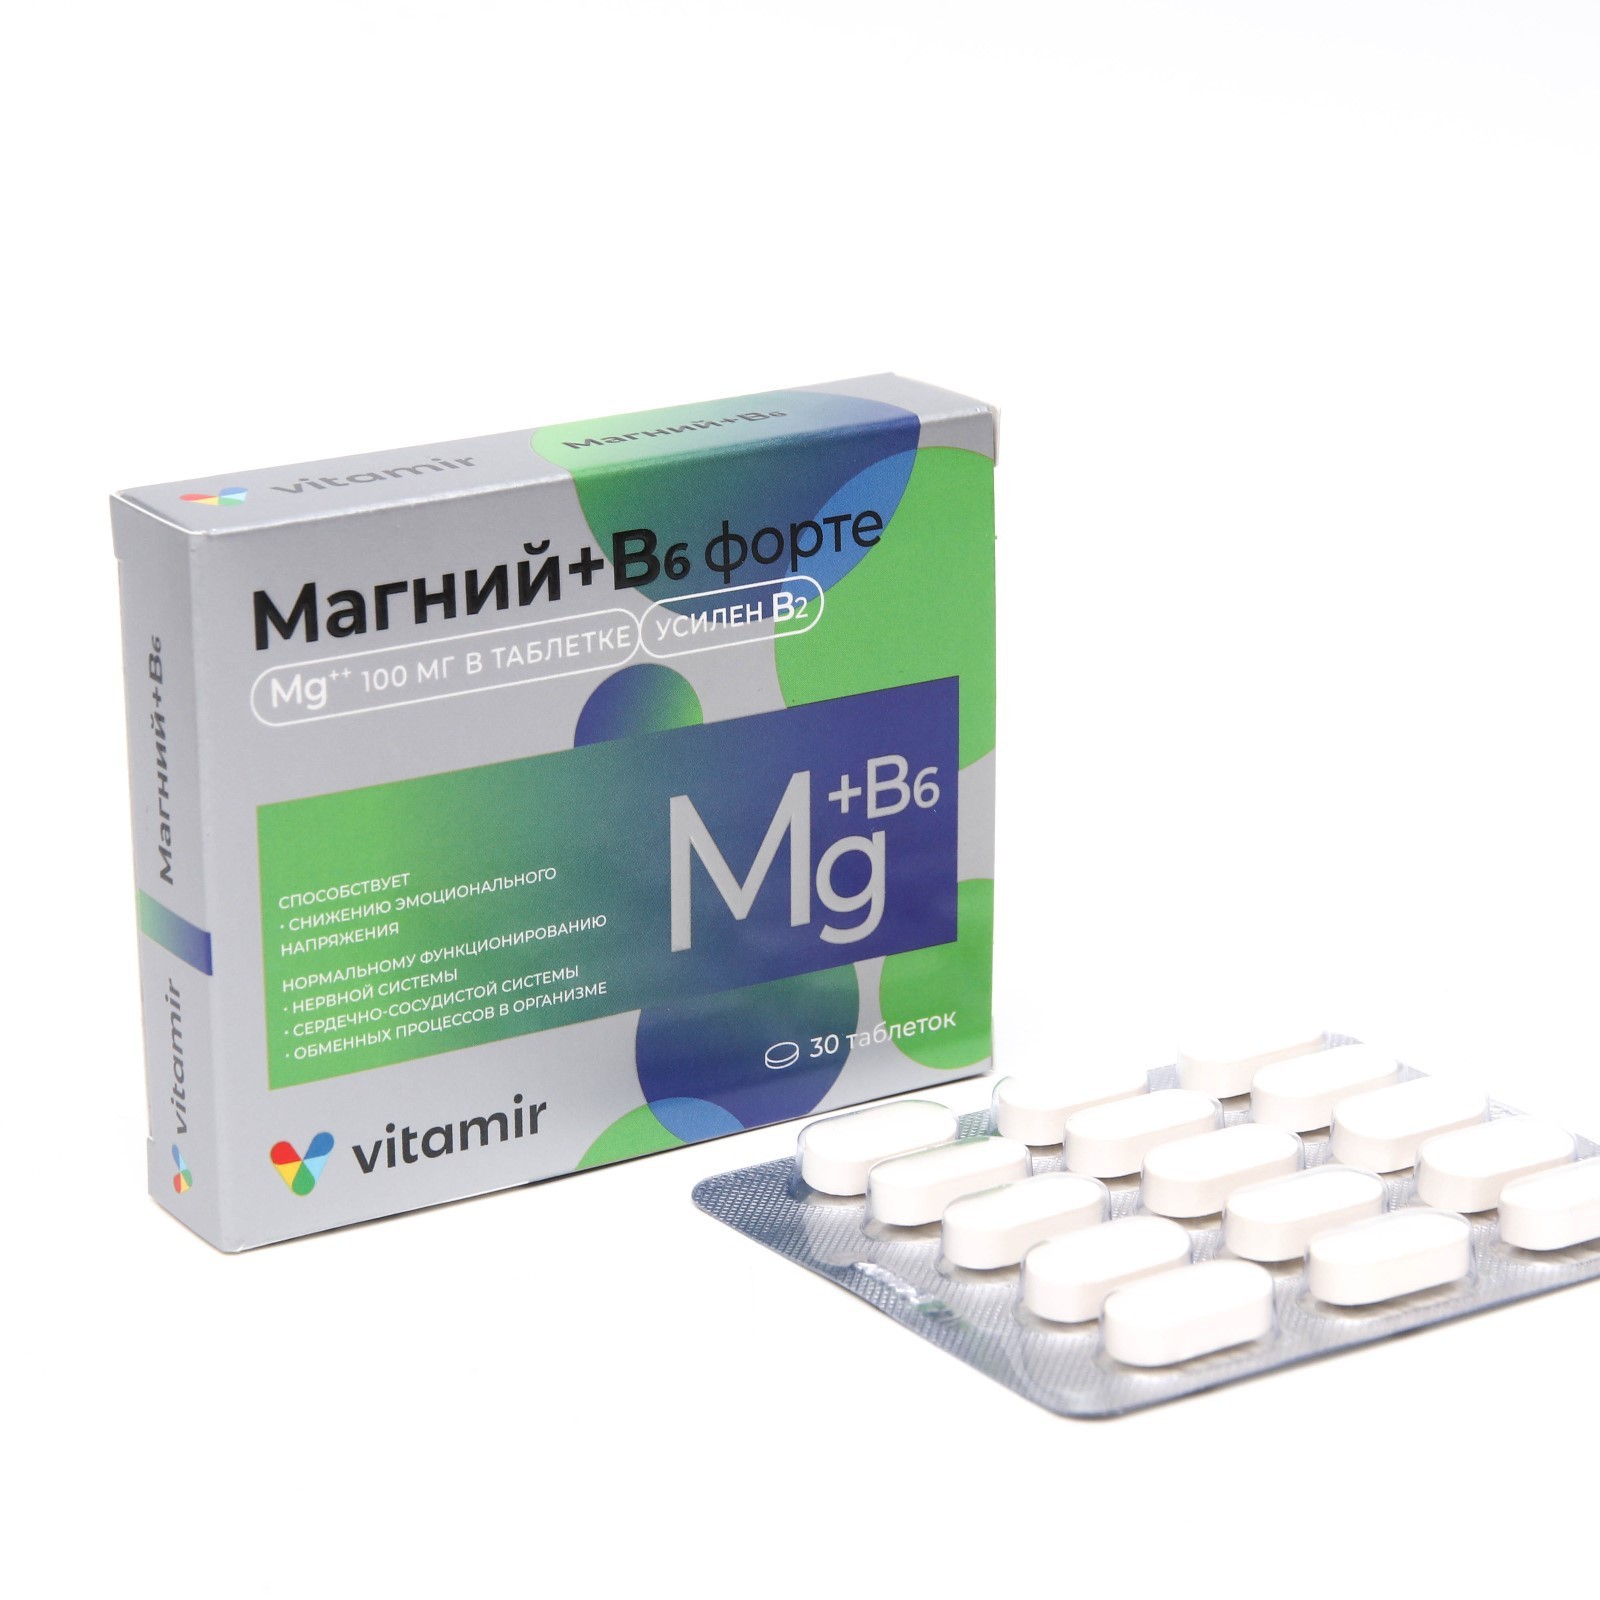 Магний б6 форте таблетки. Magnesium b6 Forte. Магний б6 форте 100 мг. Магний форте в6 форте витамир.